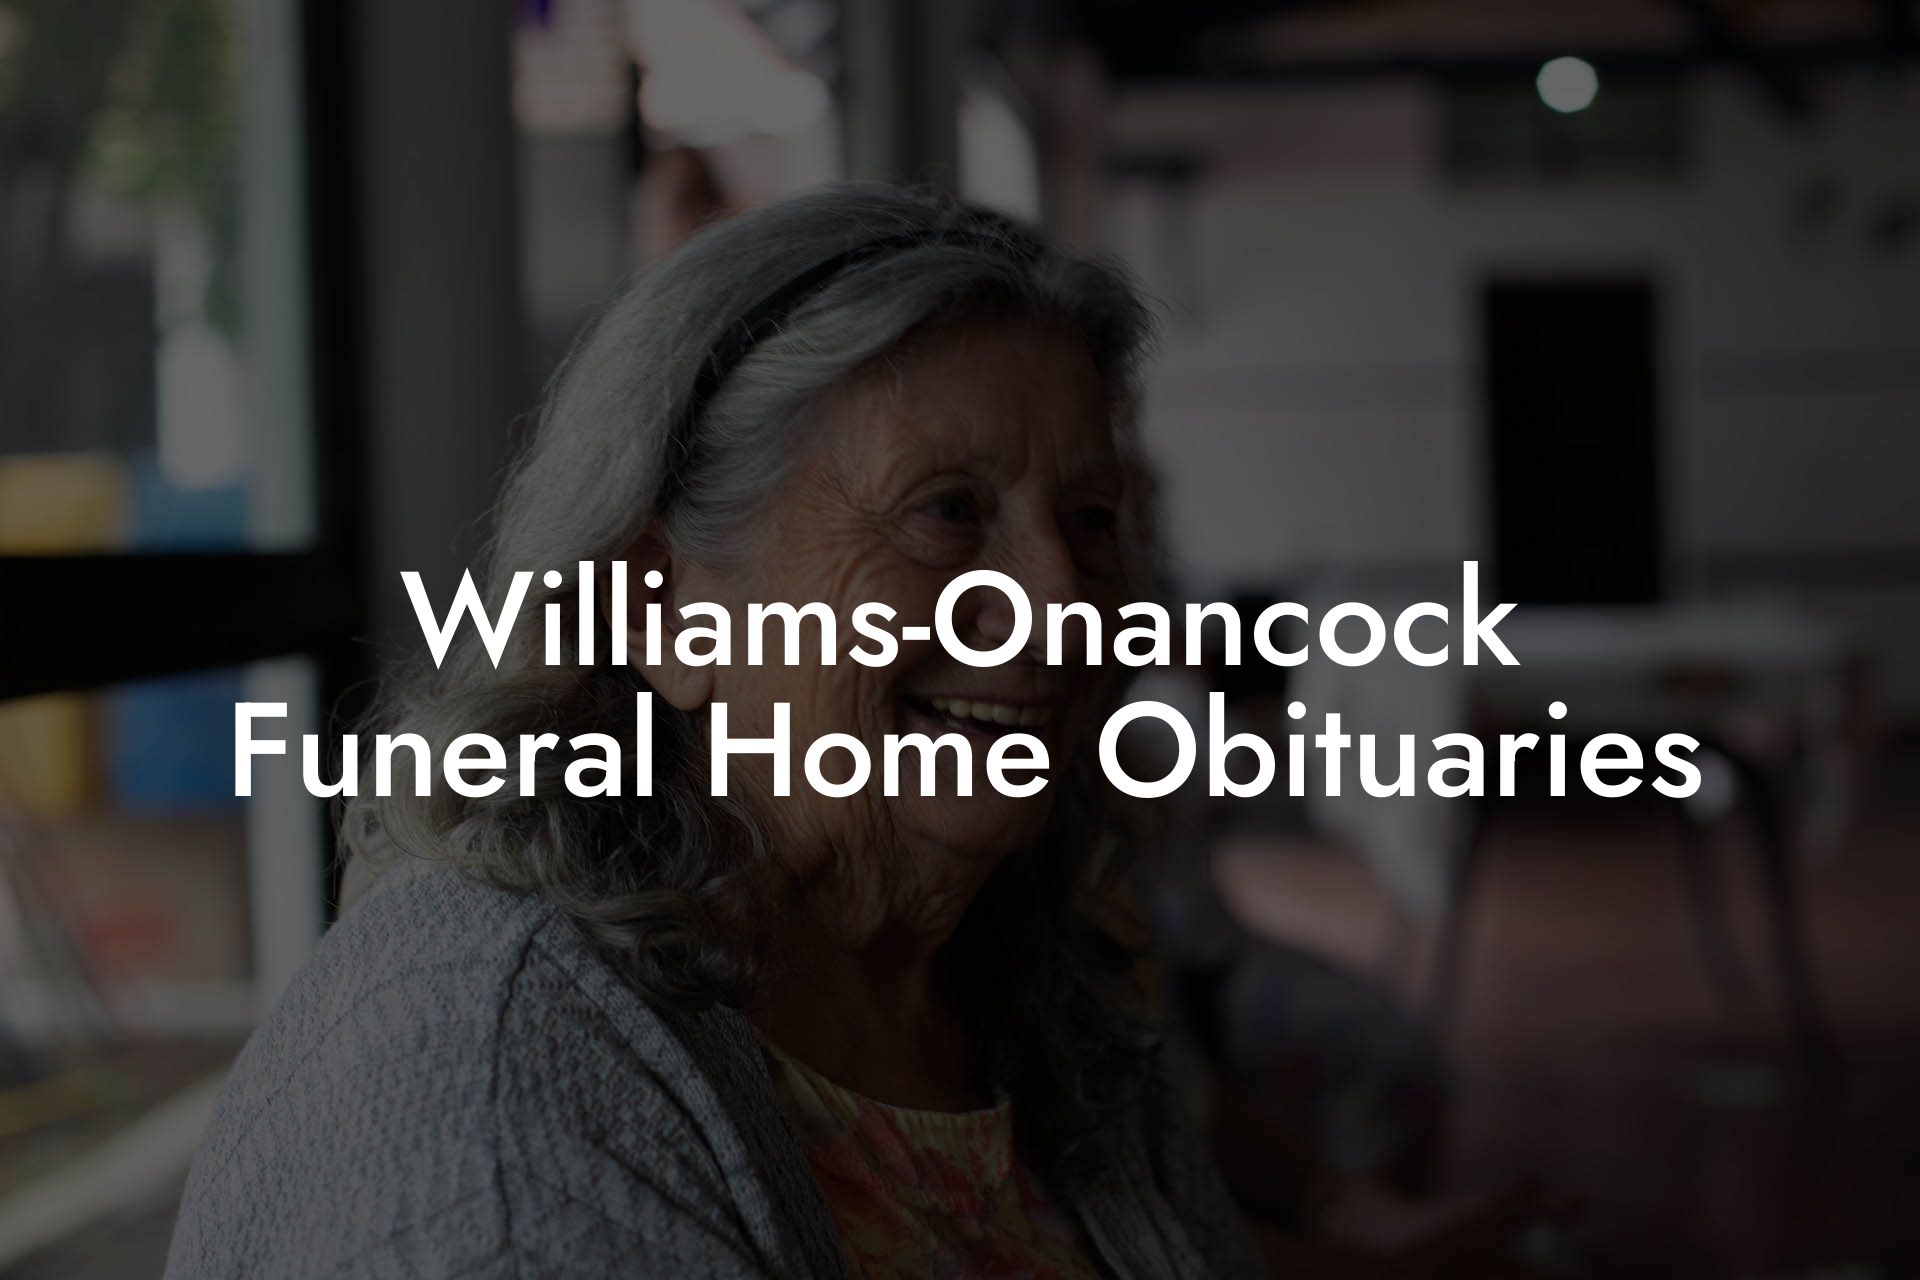 Williams-Onancock Funeral Home Obituaries